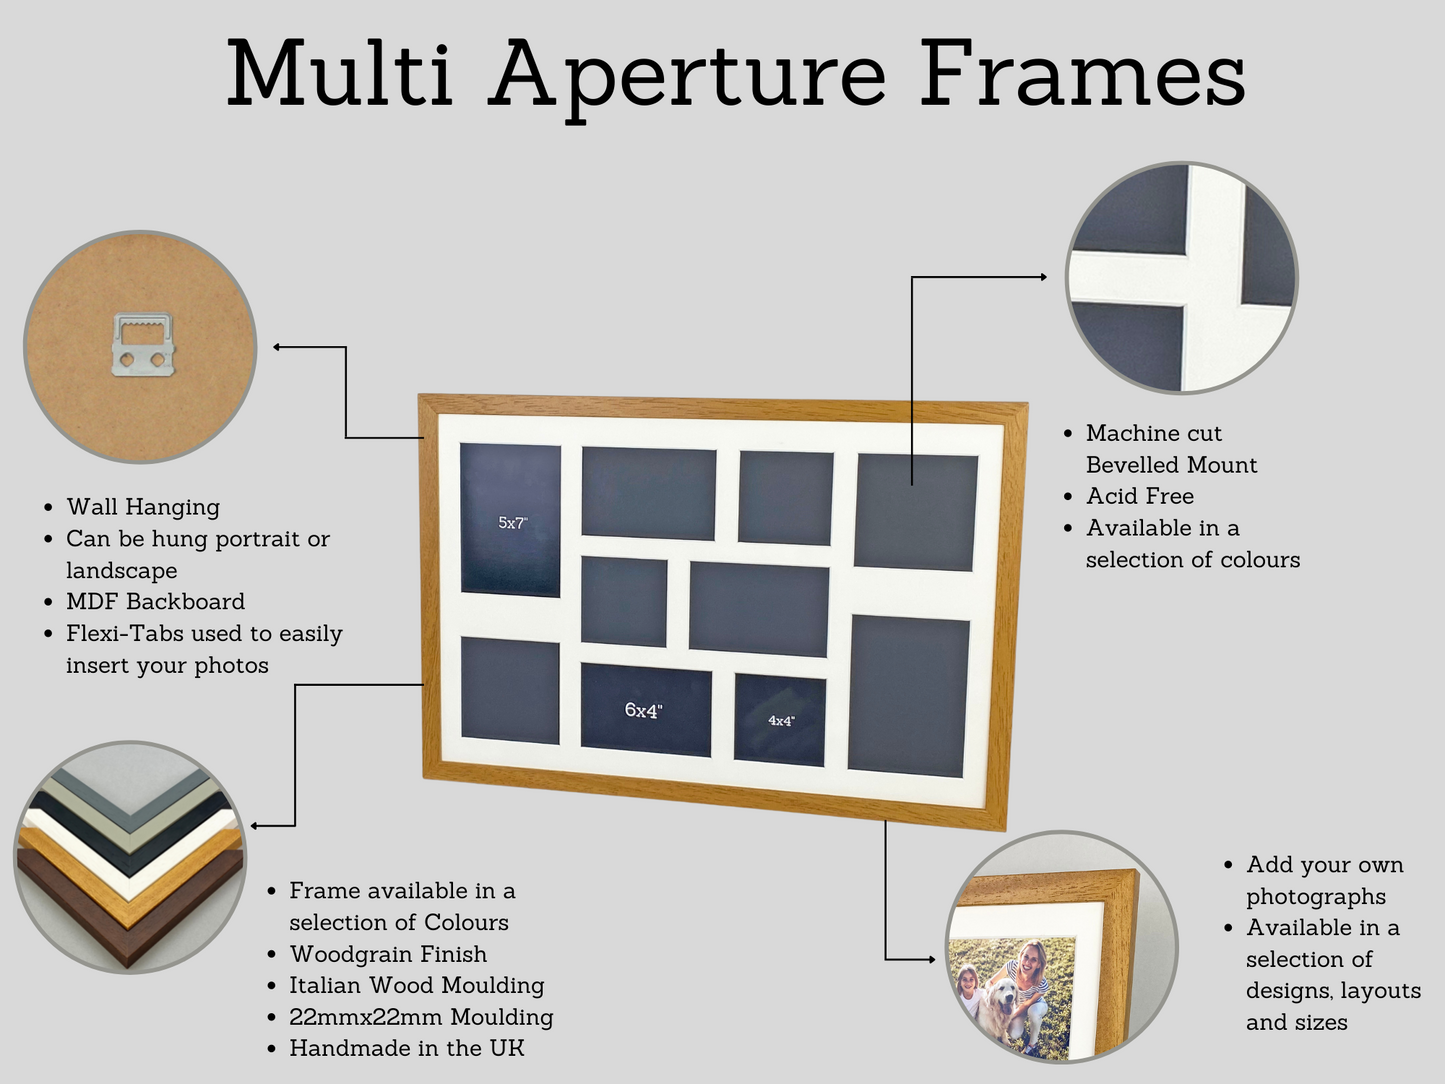 Suits Nine 5x5" photos. 50x50cm. Wooden Multi Aperture Photo Frame. - PhotoFramesandMore - Wooden Picture Frames